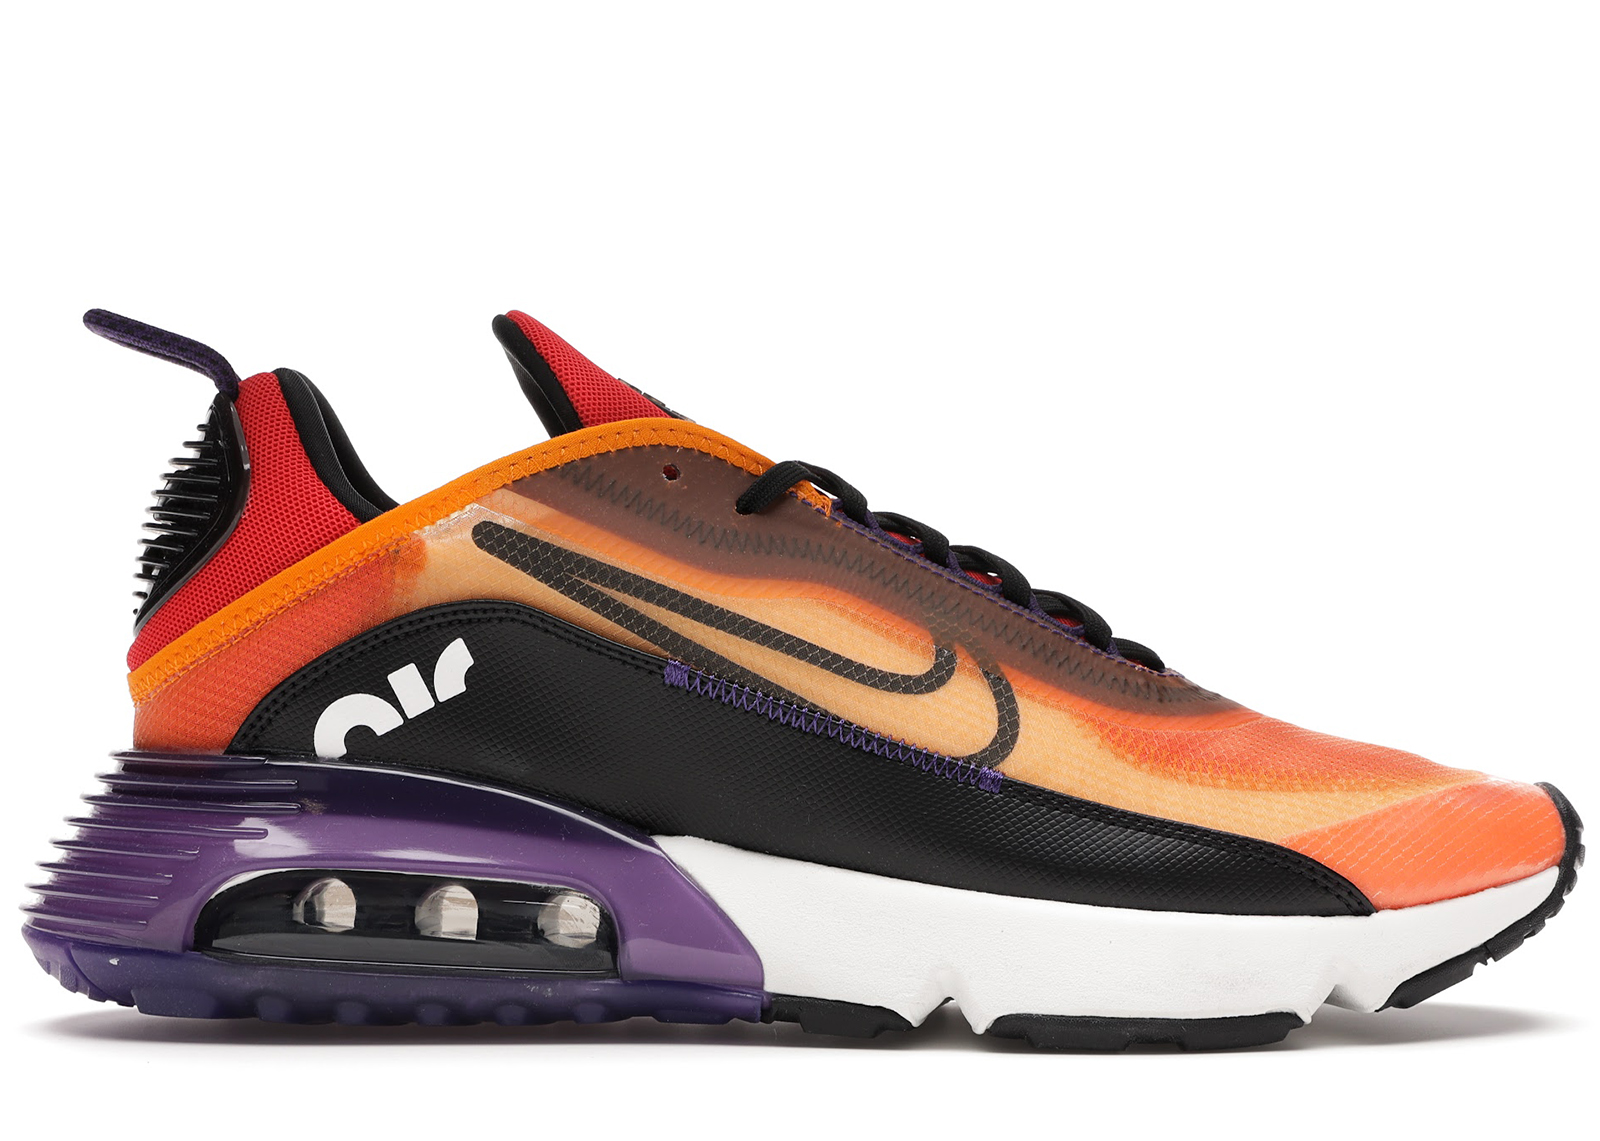 orange and purple tennis shoes